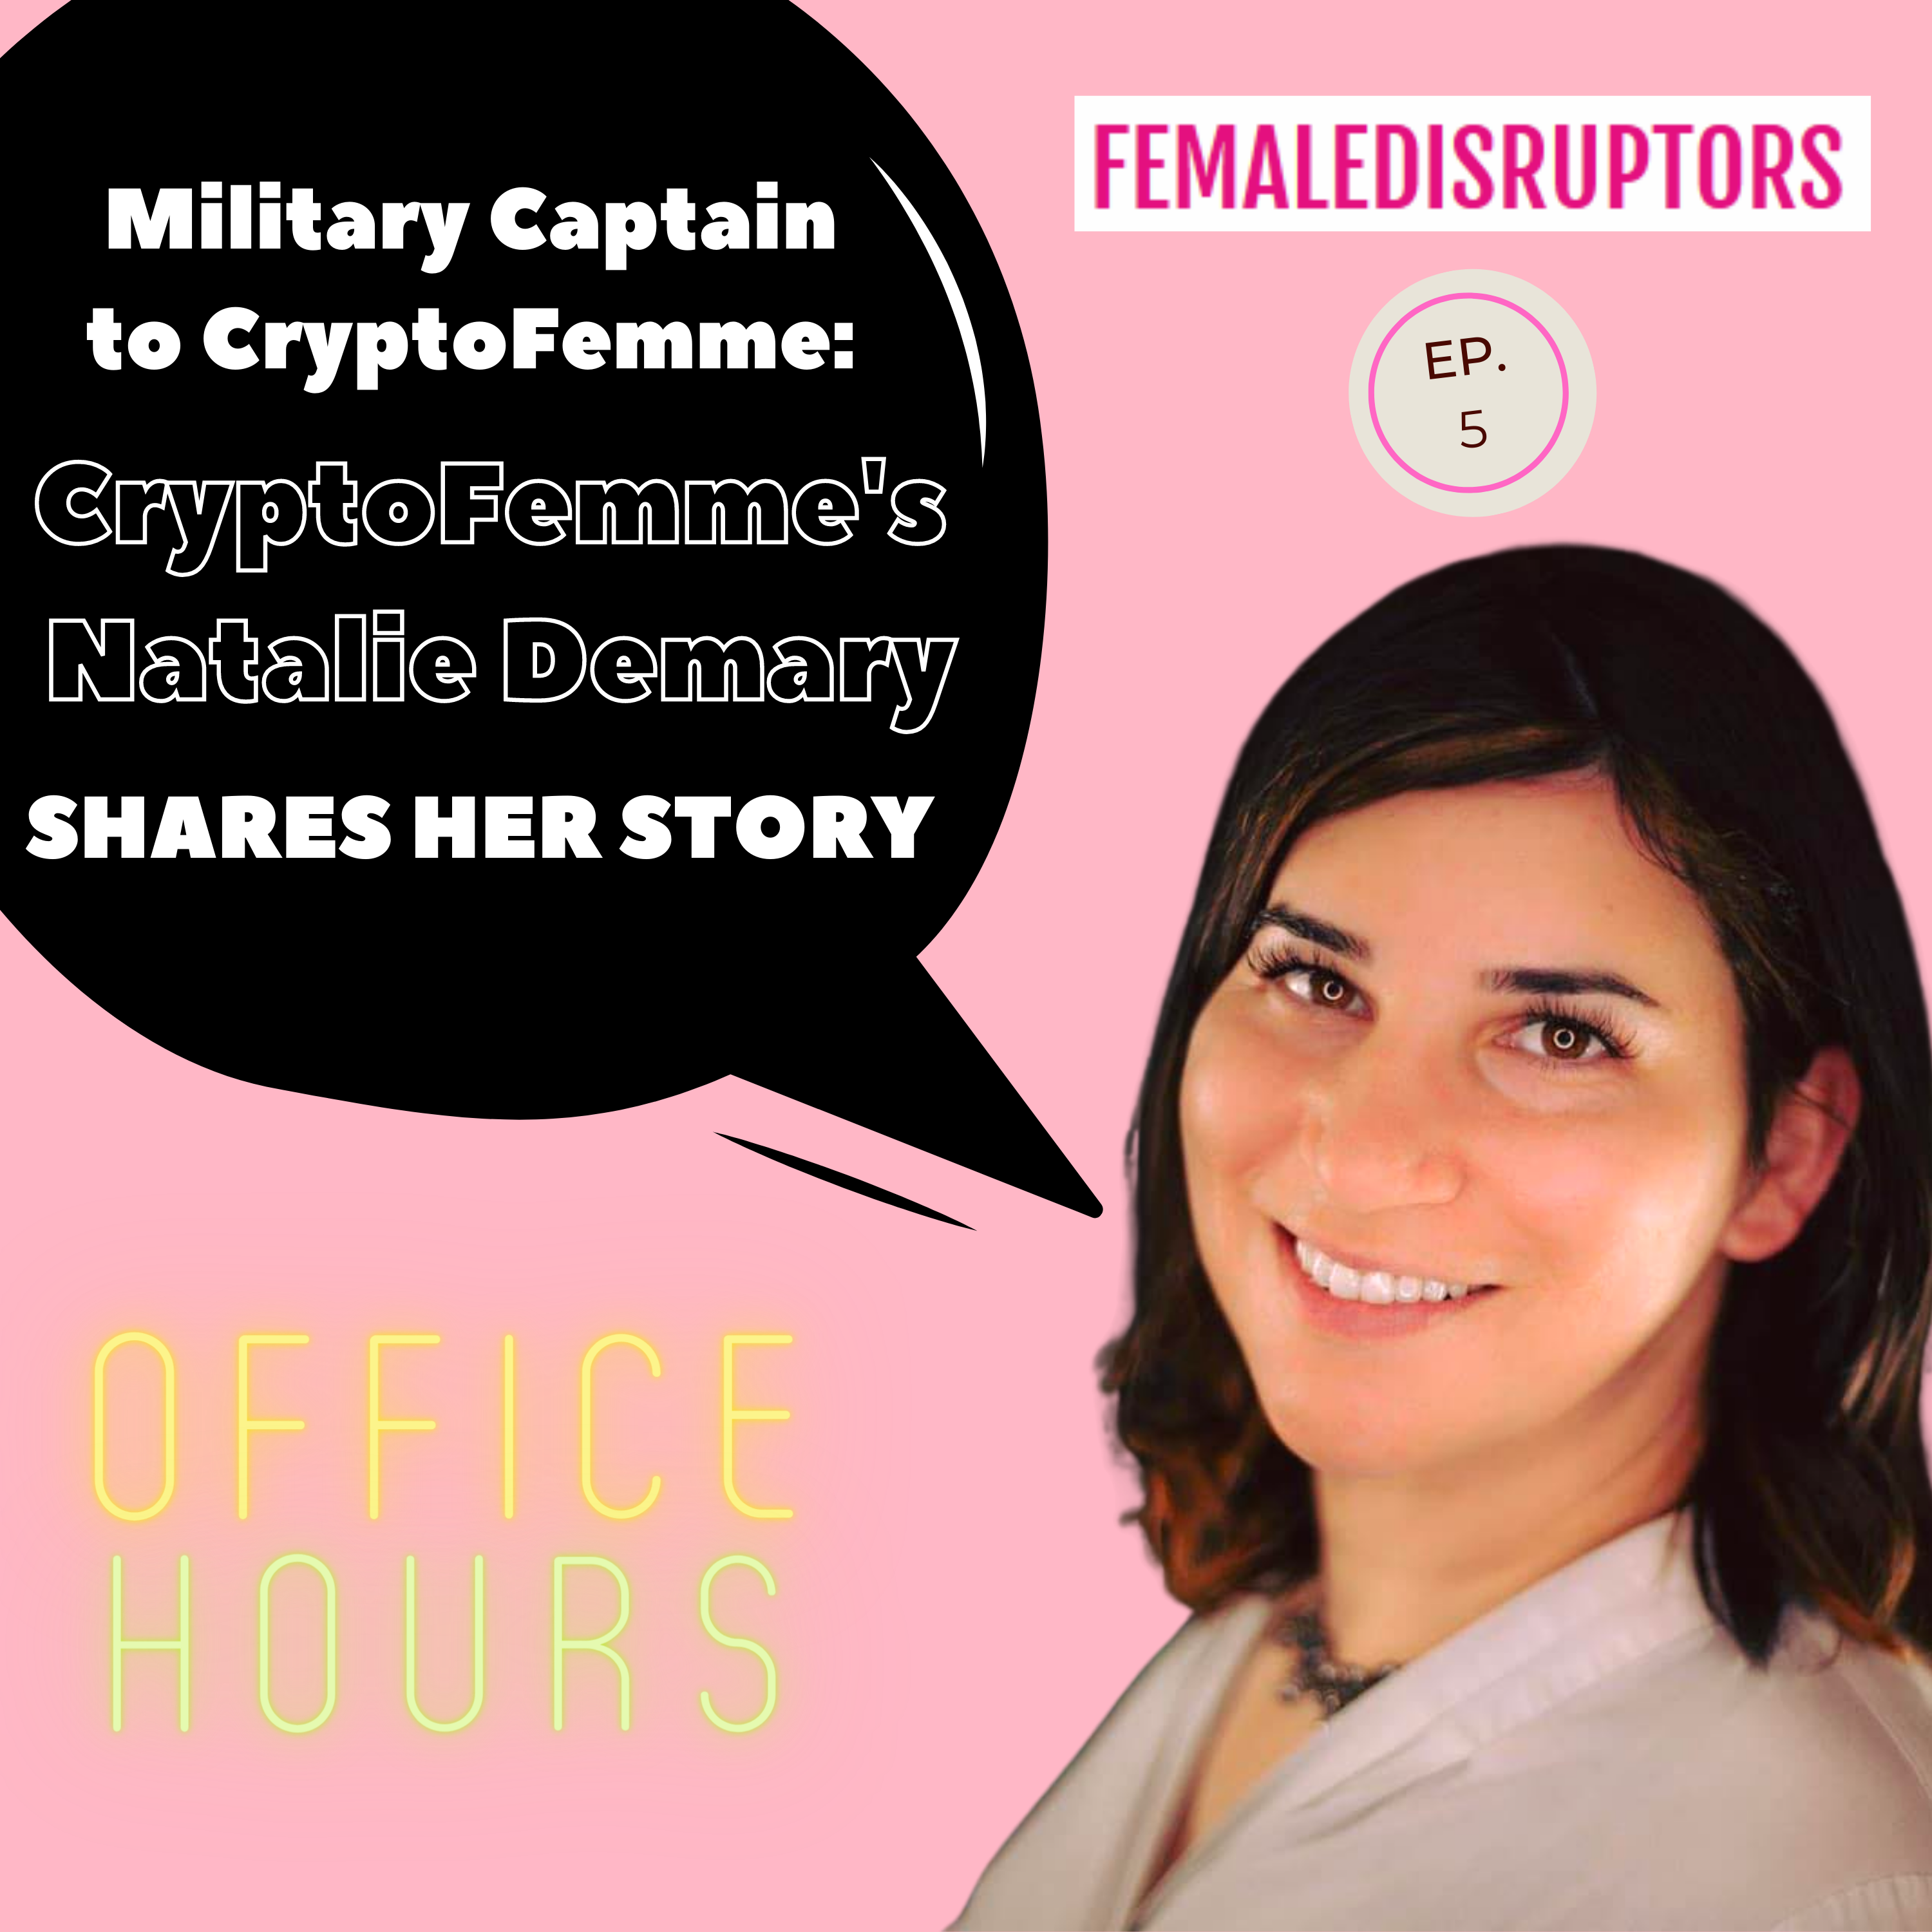 Military Captain to Crypto Fem: CryptoFemme’s Natalie DeMary Shares Her Story